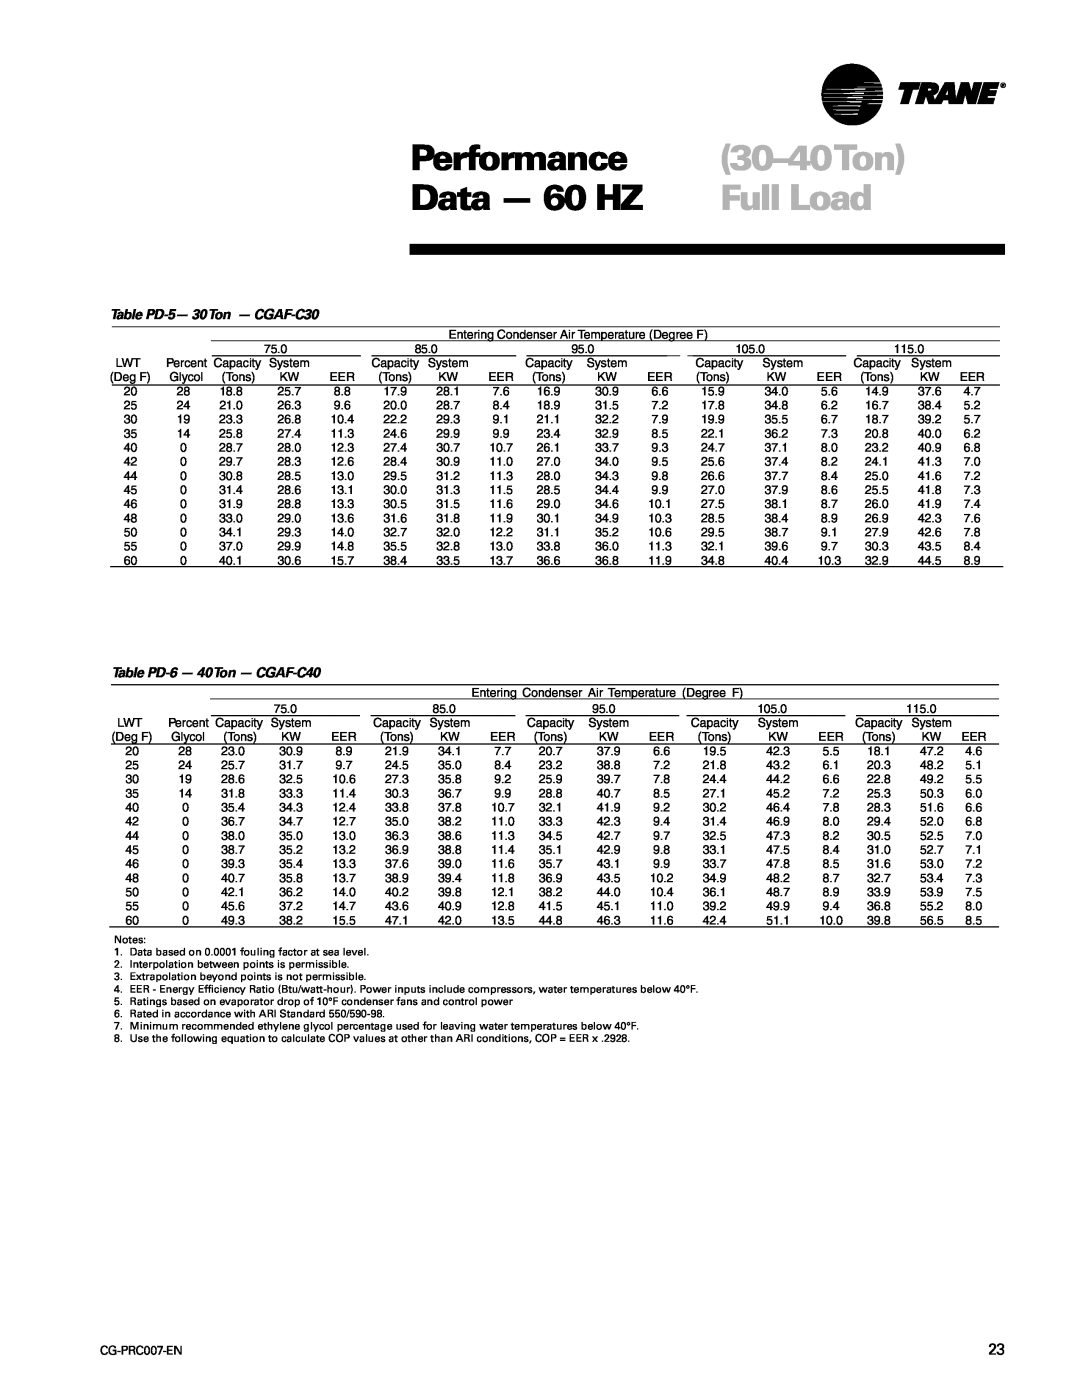 Trane CG-PRC007-EN manual 30-40Ton, Performance, Data - 60 HZ, Full Load, Table PD-5-30Ton - CGAF-C30 